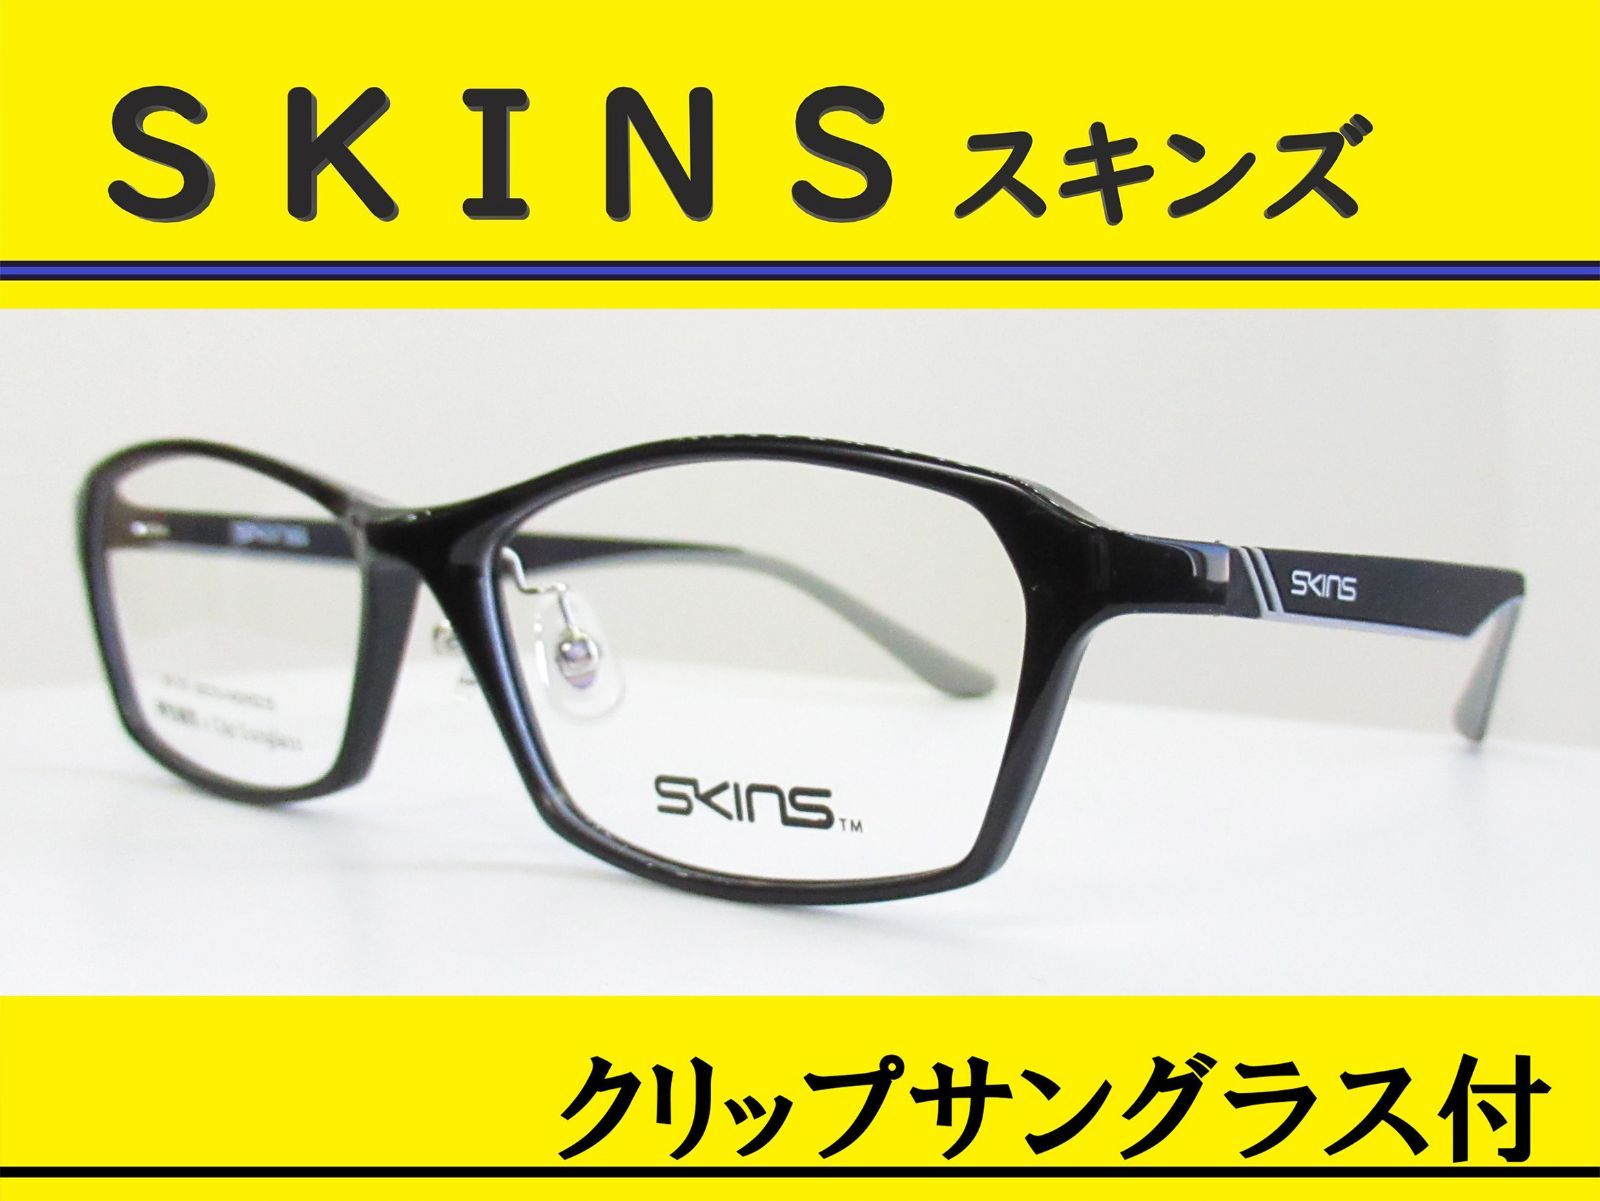 SKINS スキンズ◇クリップサングラス付 メガネフレーム SK-150-1